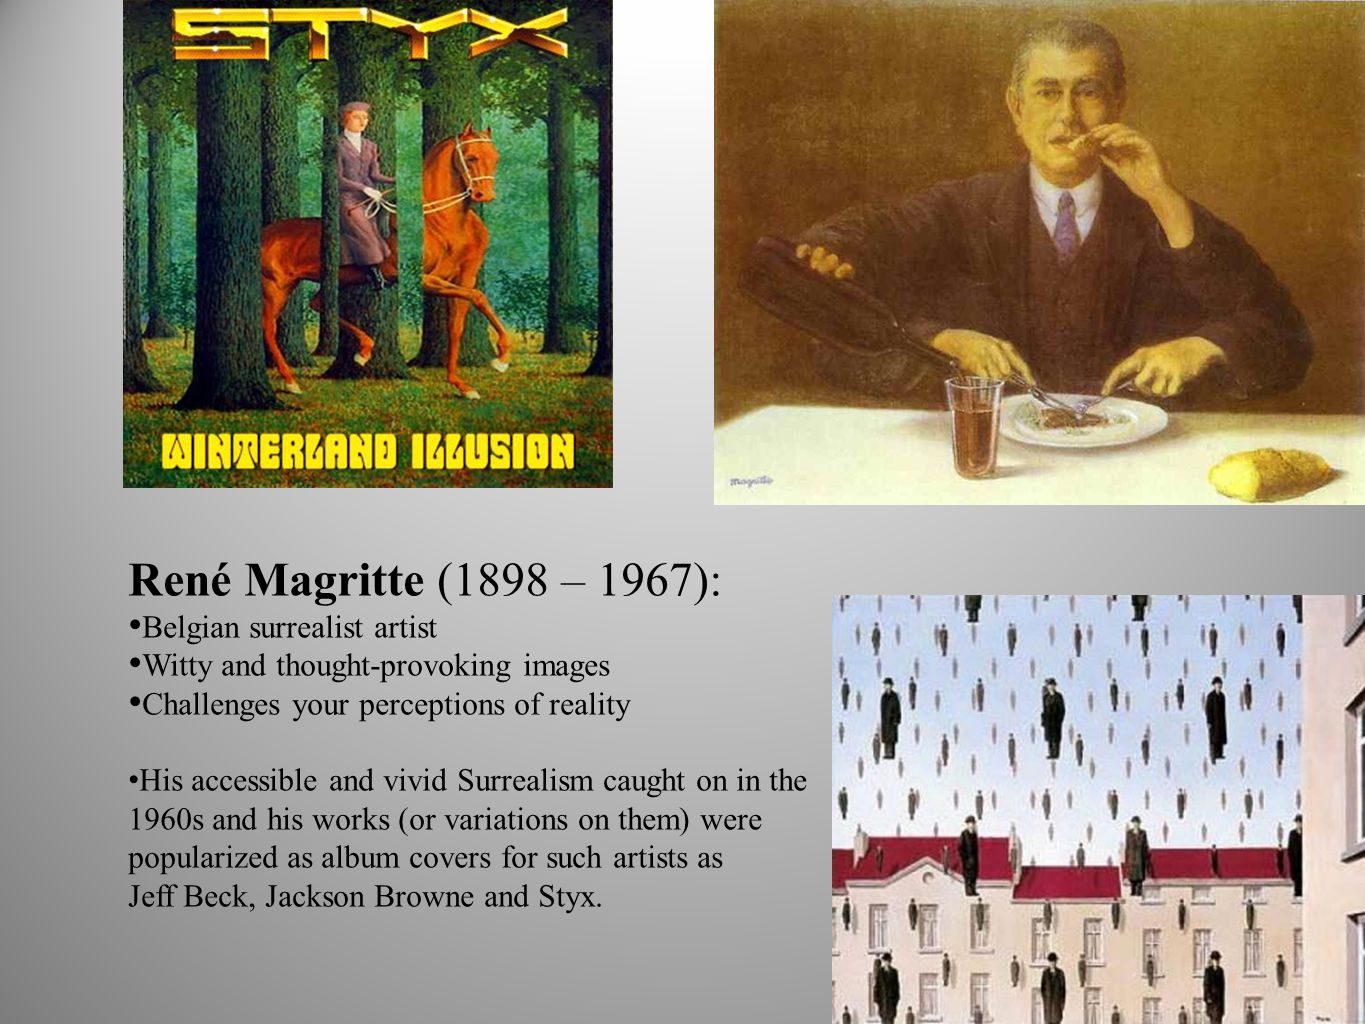 René Magritte (1898 – 1967): Belgian surrealist artist